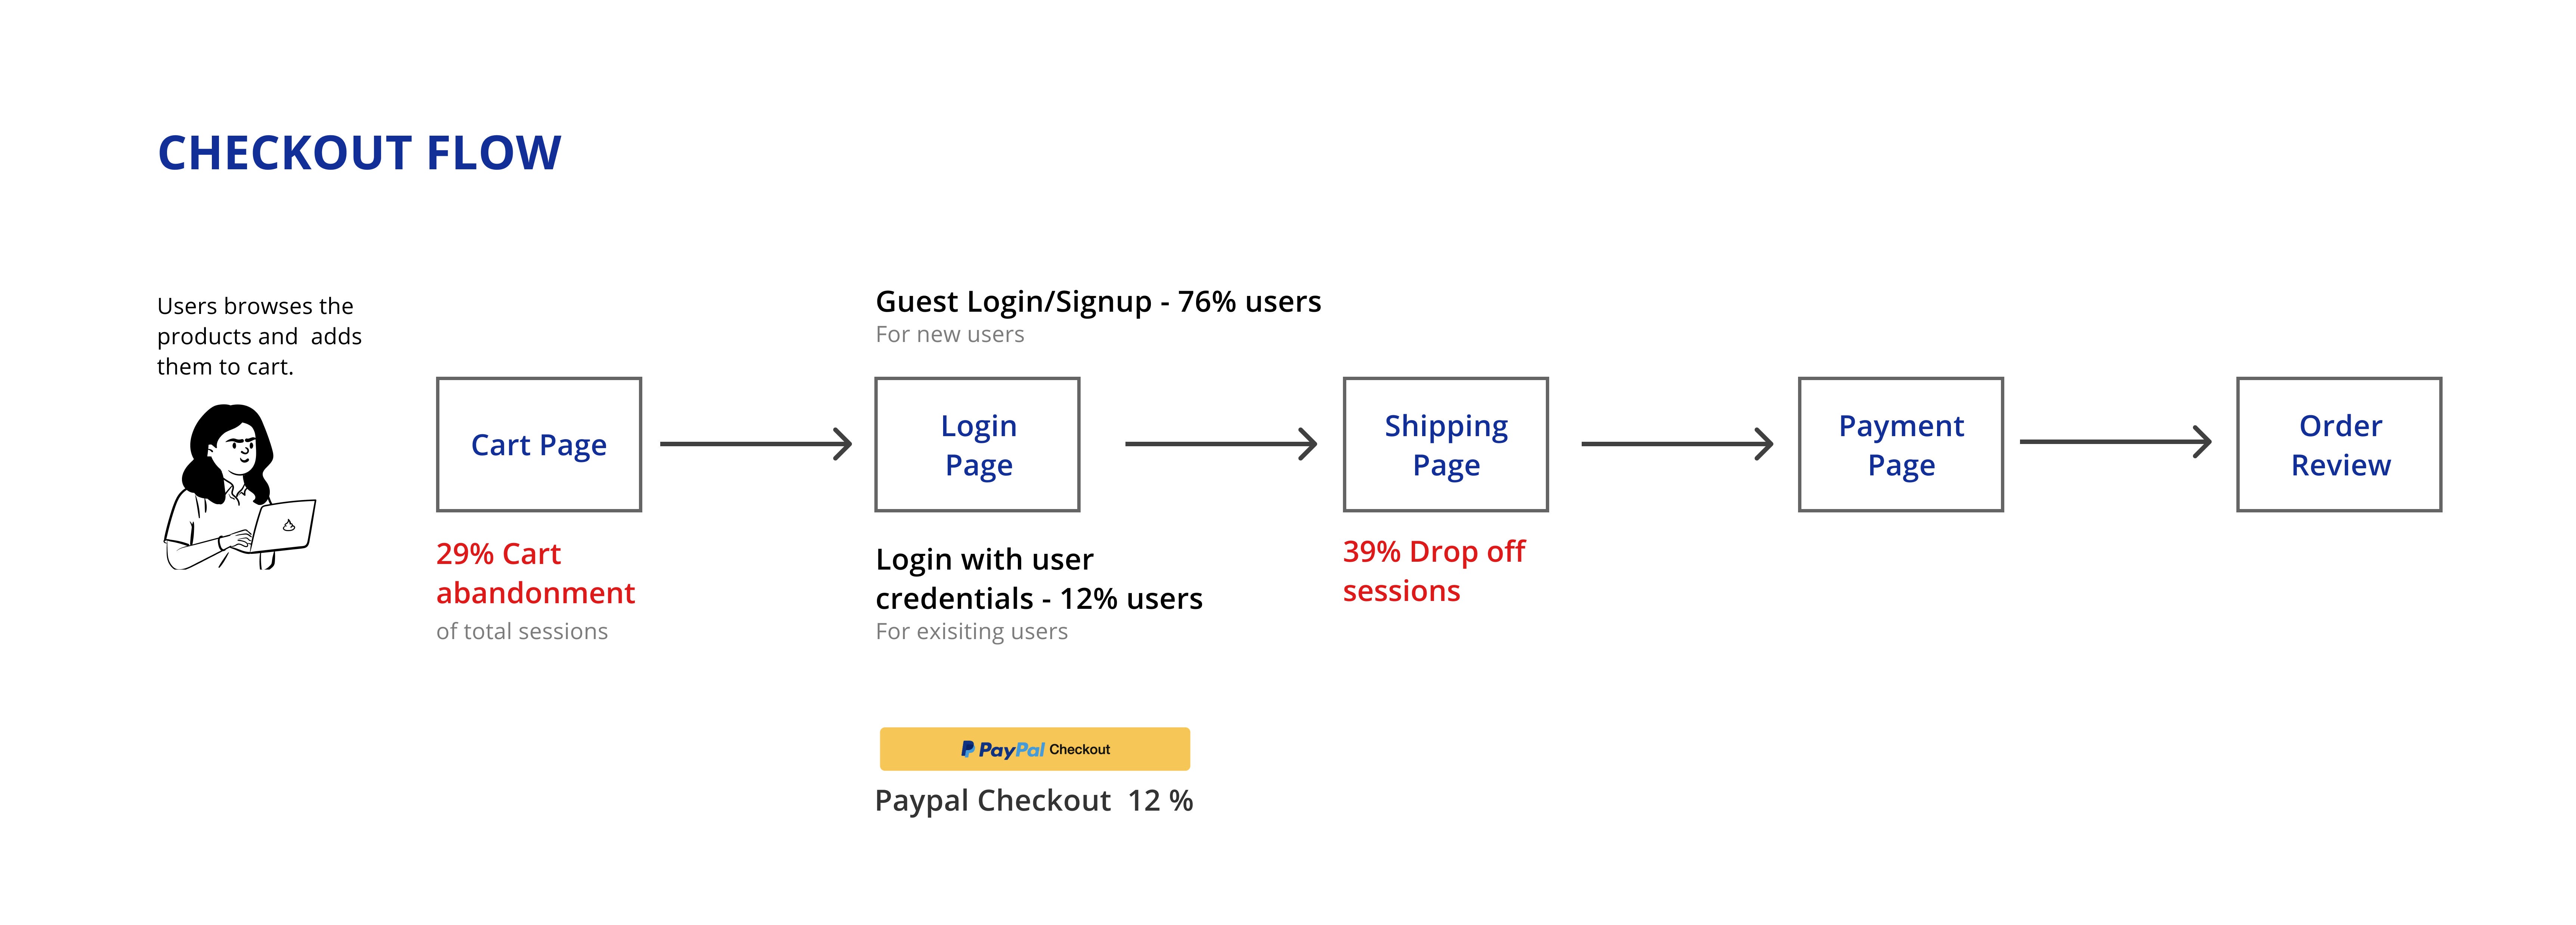 How to improve an E-Commerce Checkout Experience: UI/UX Case study, by  Shriya Shekhar